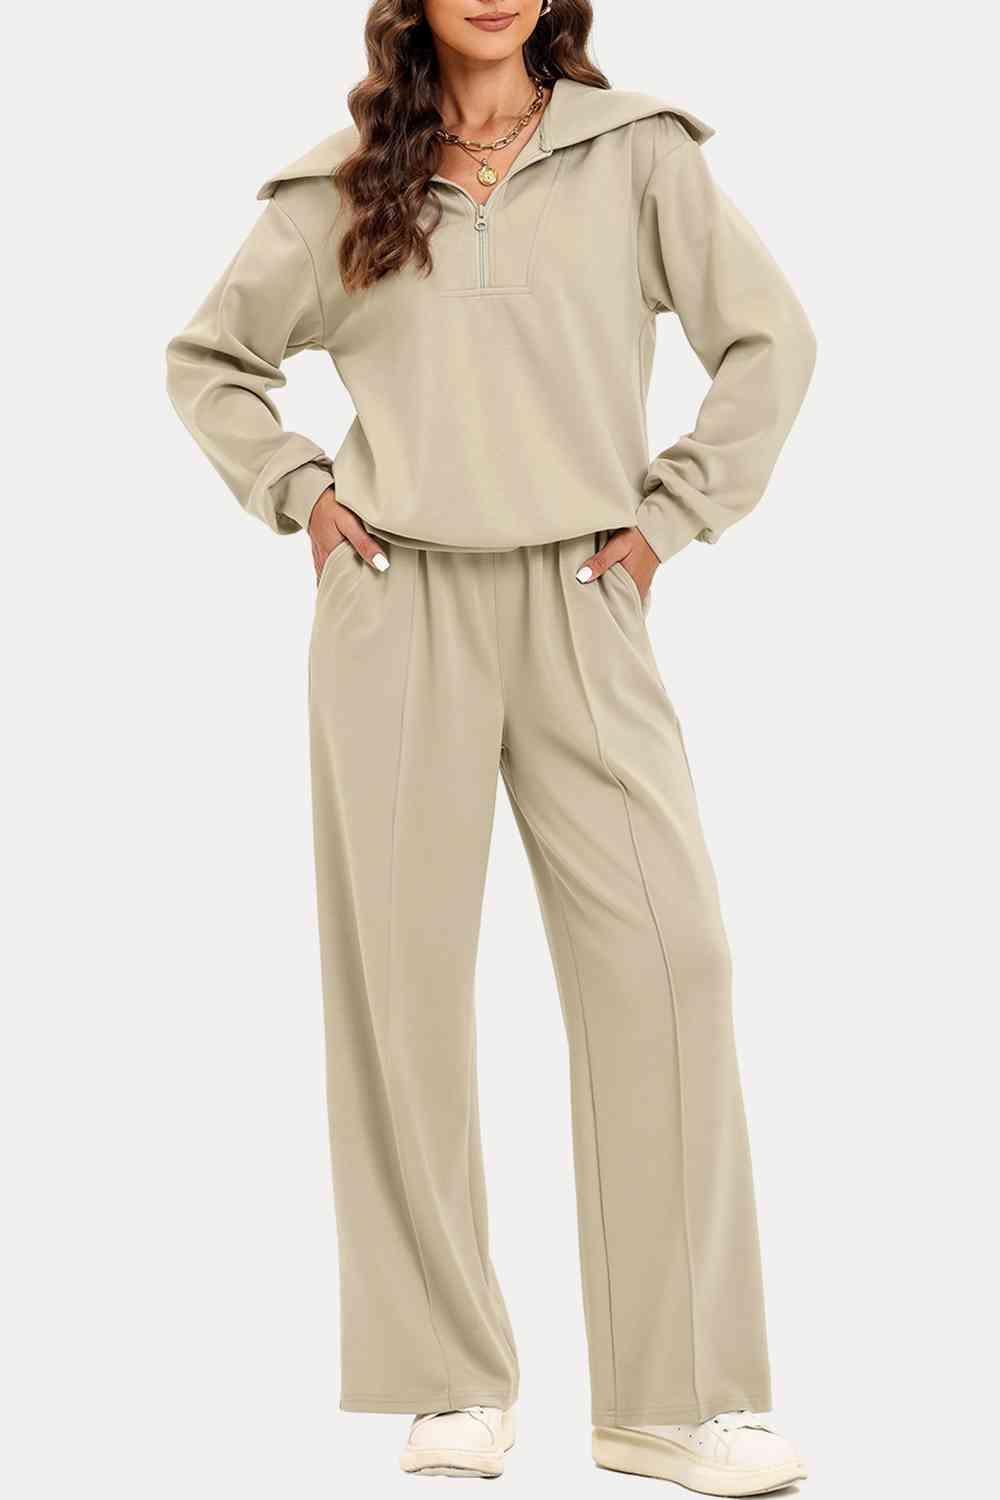 Bona Fide Fashion - Half Zip Collared Neck Sweatshirt and Pants Set - Women Fashion - Bona Fide Fashion